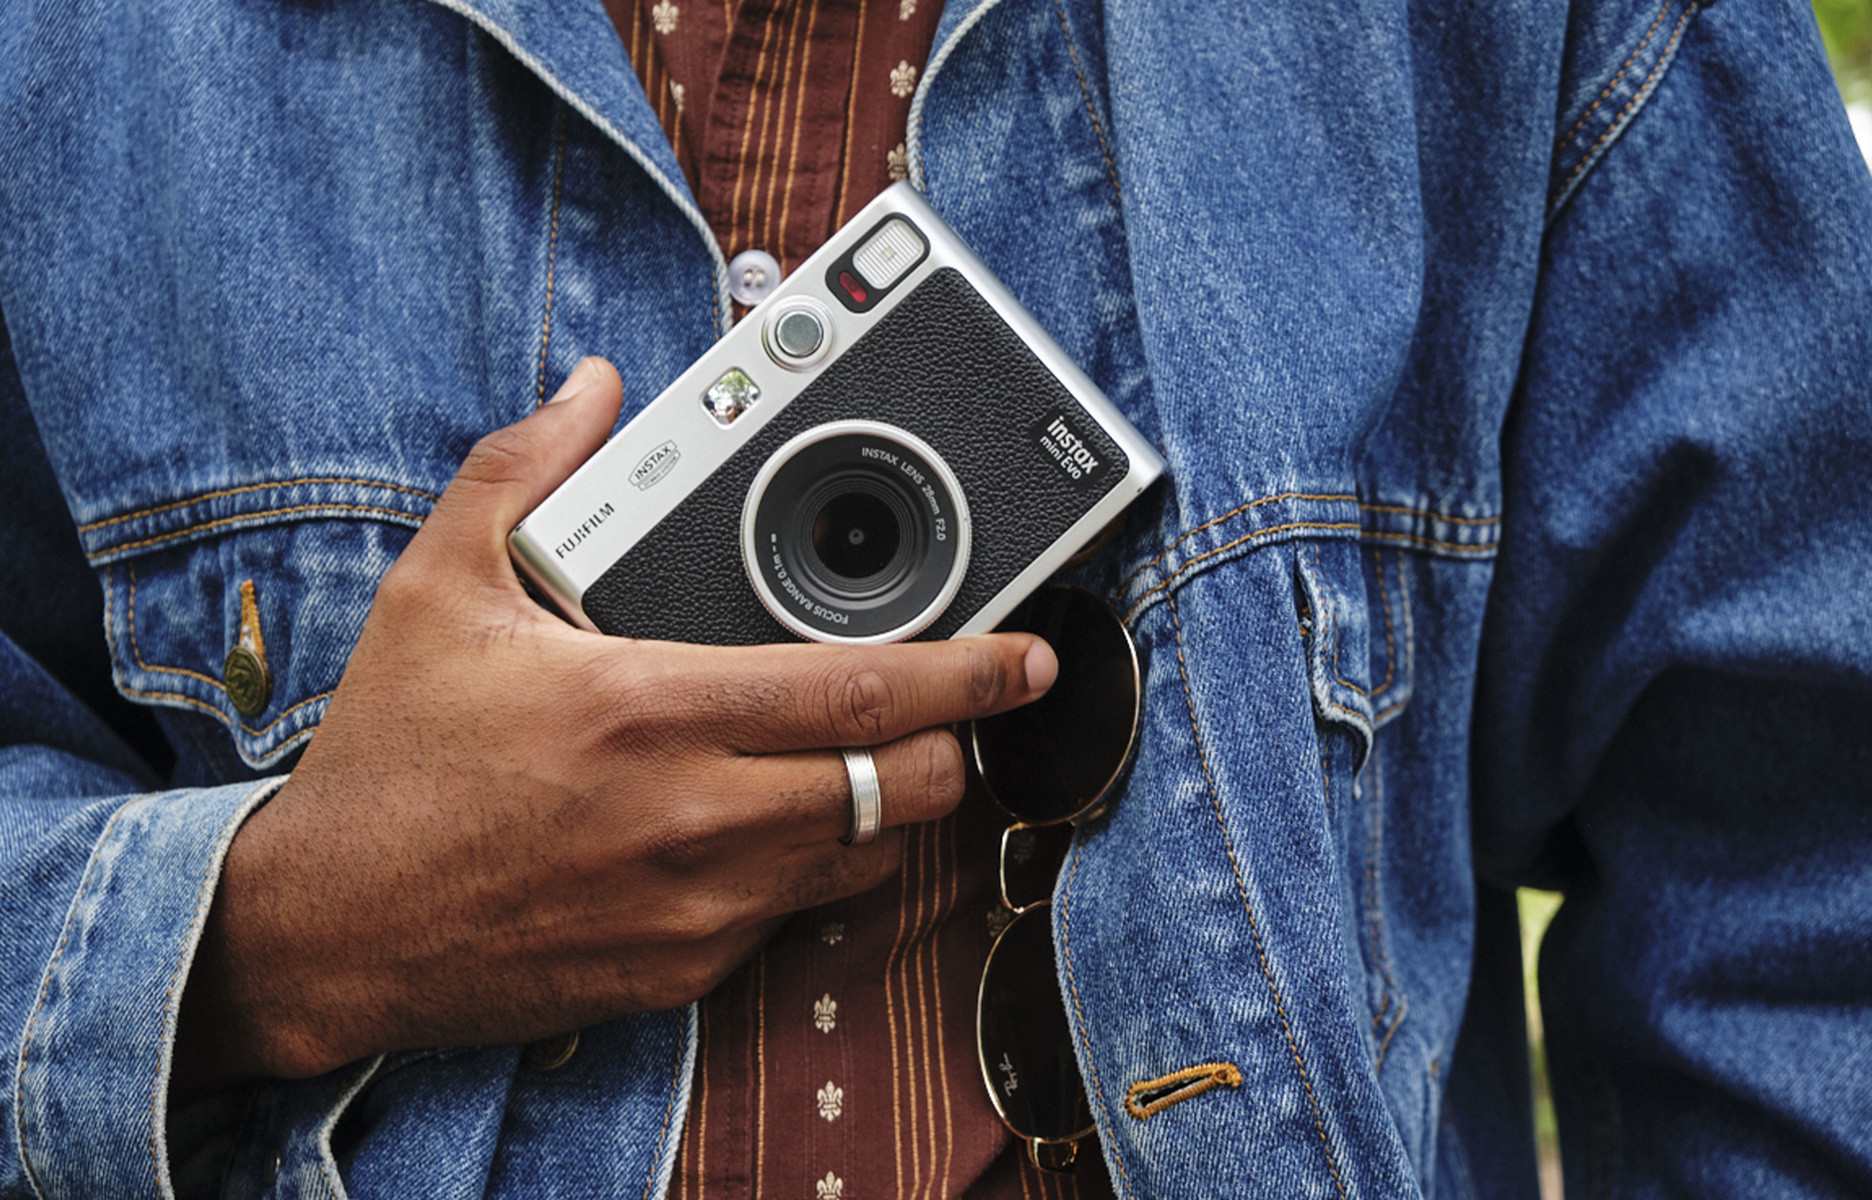 Instax mini Evo : l'appareil photo instantané / imprimante connecté de  Fujifilm